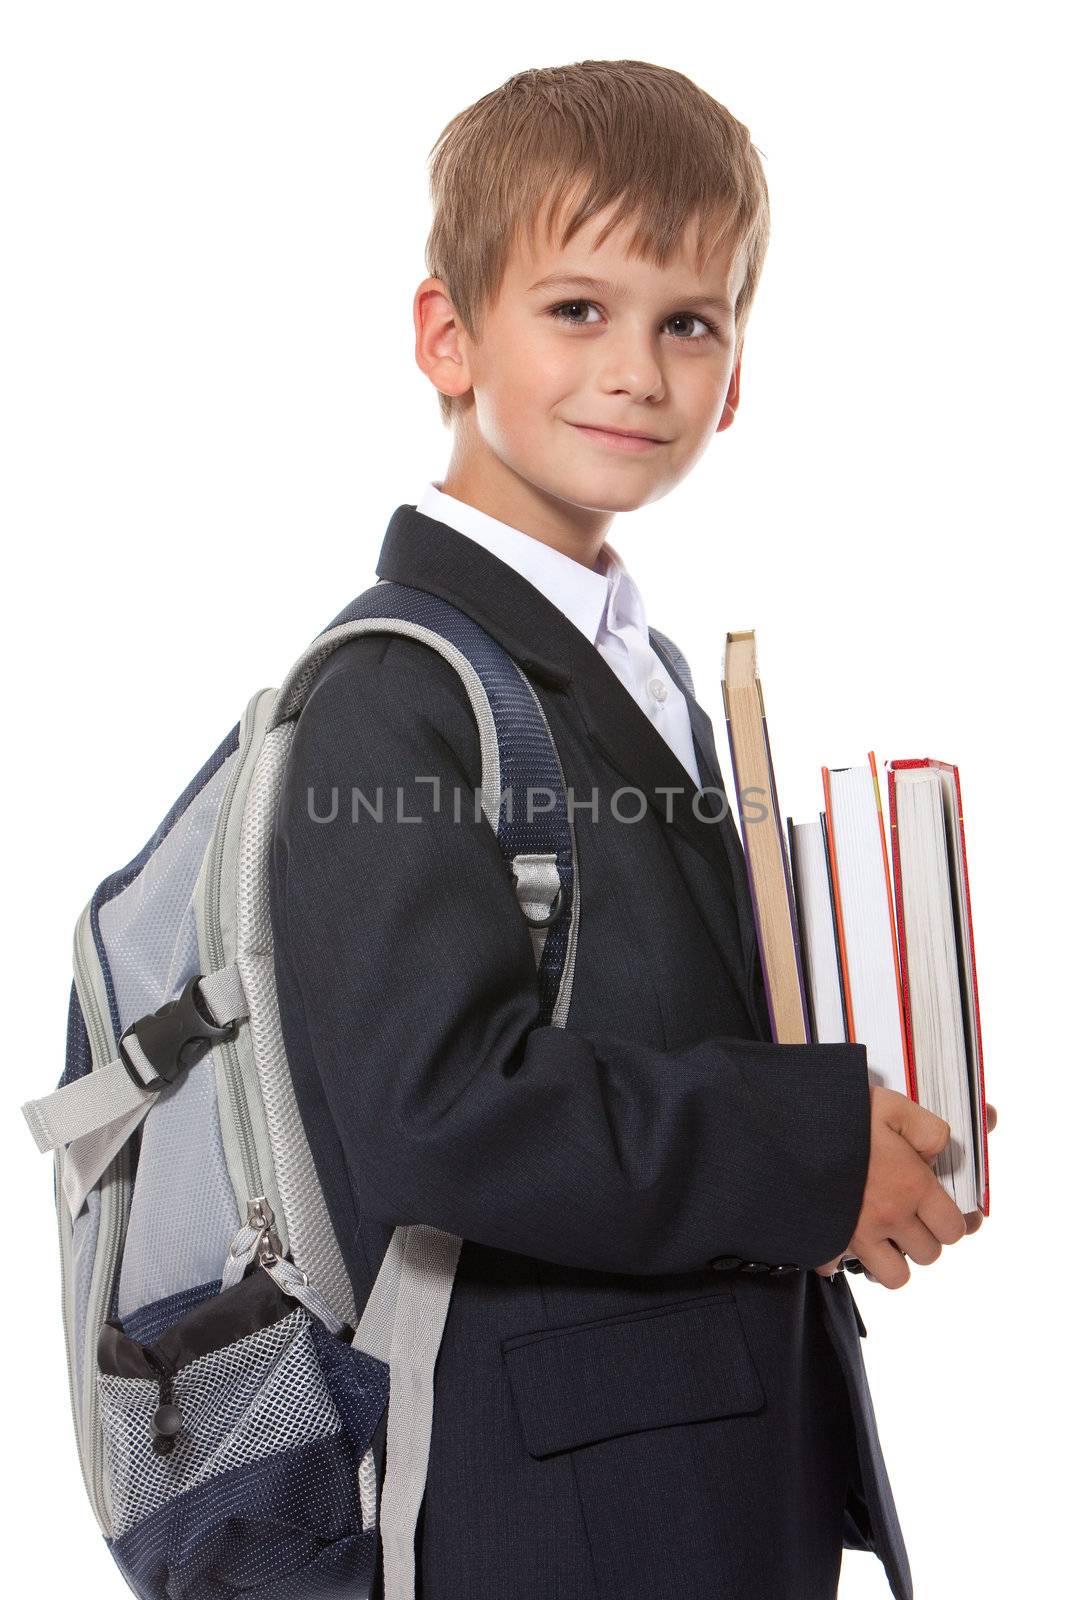 Boy holding books by bloodua